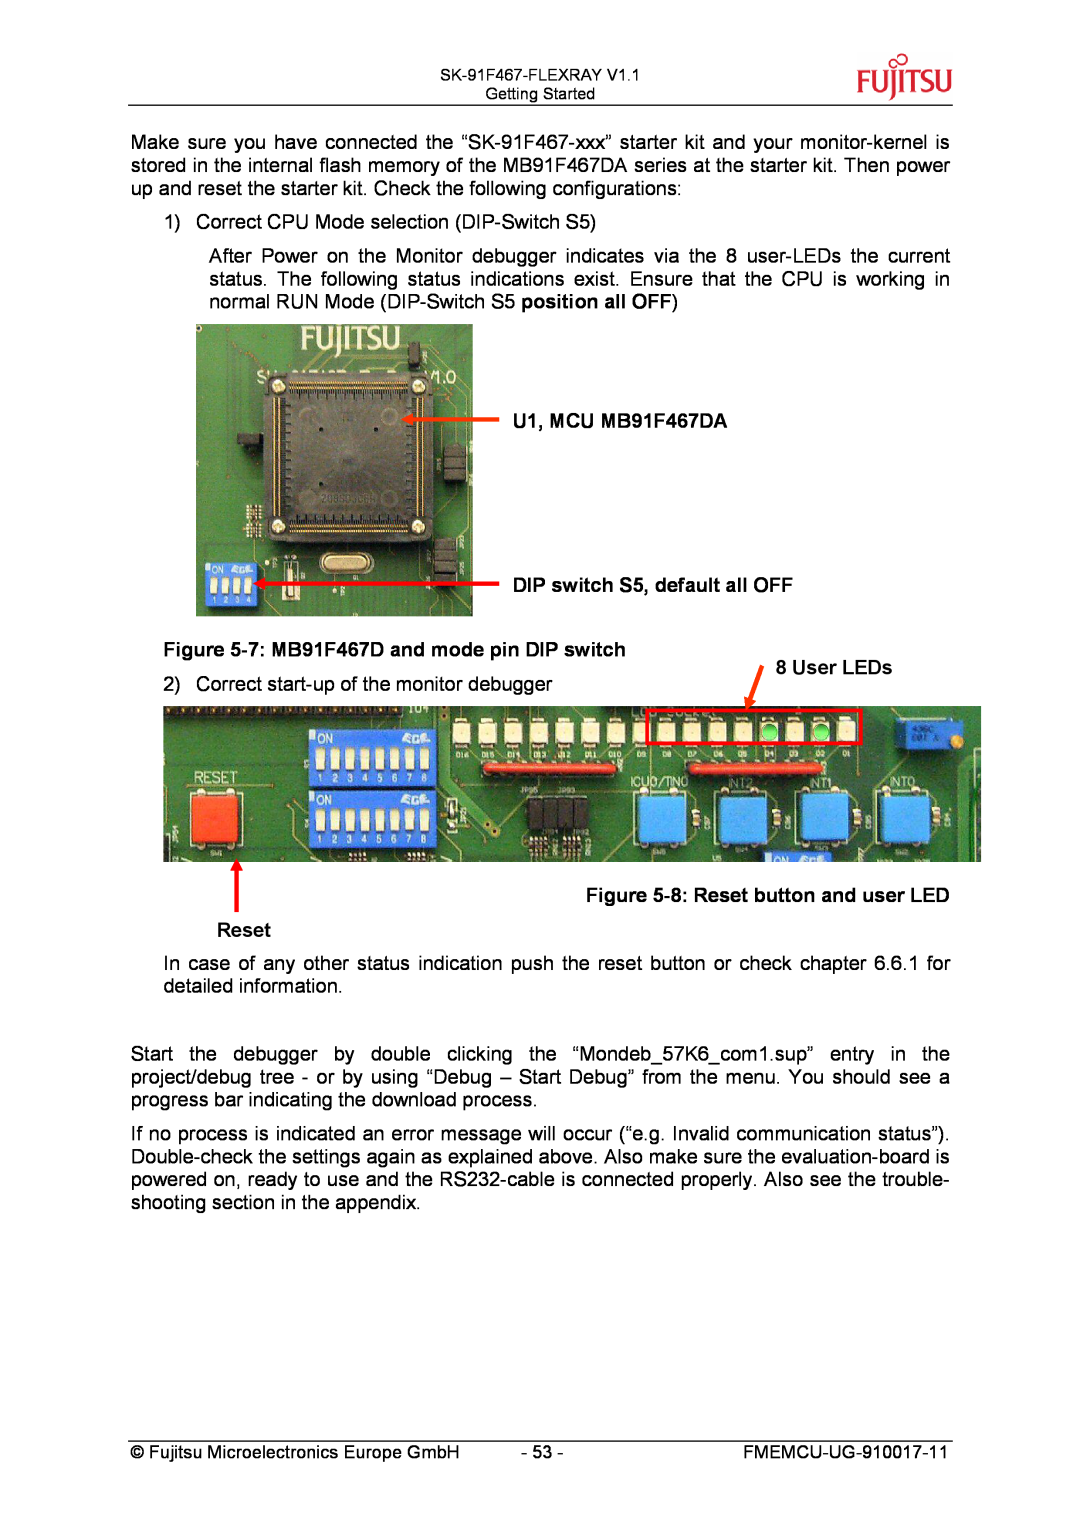 Fujitsu MB88121 SERIES U1, MCU MB91F467DA DIP switch S5, default all OFF, 7 MB91F467D and mode pin DIP switch, User LEDs 